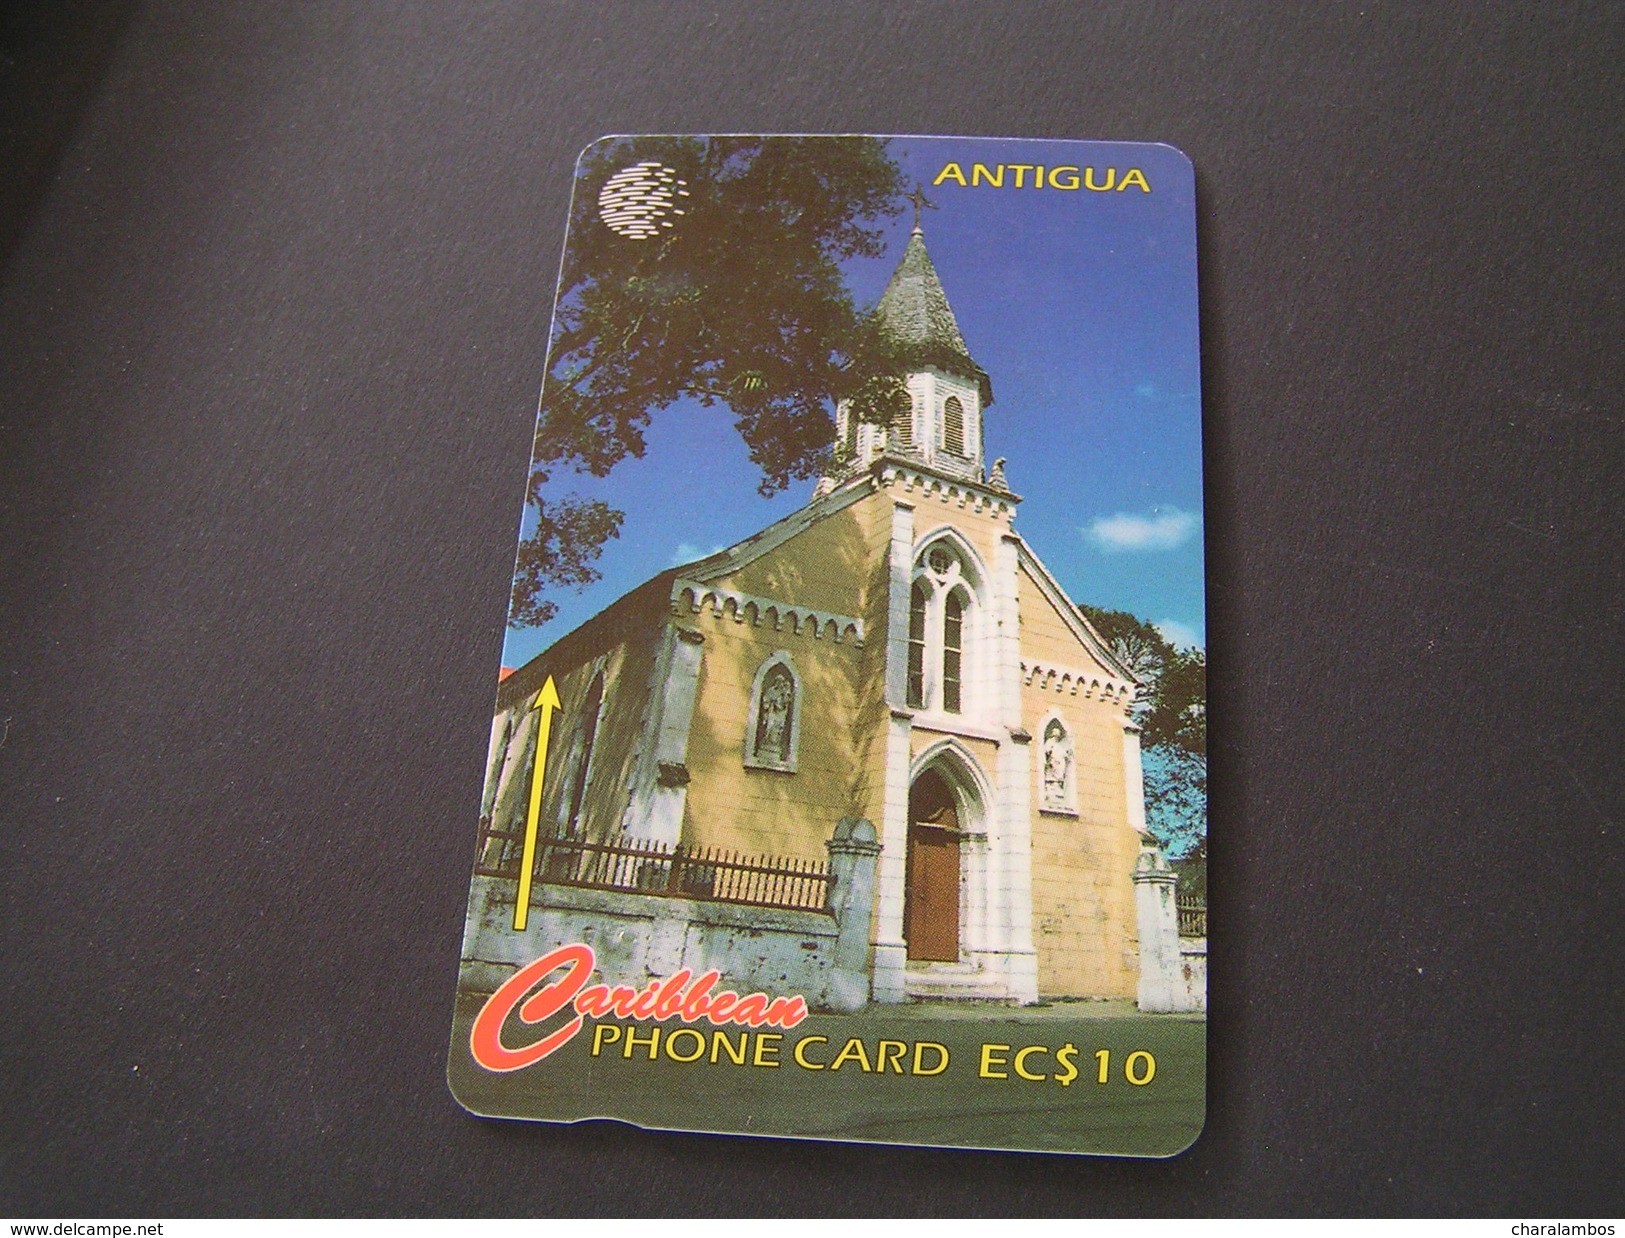 Antigua And Barbuda Phonecards. - Antigua U. Barbuda